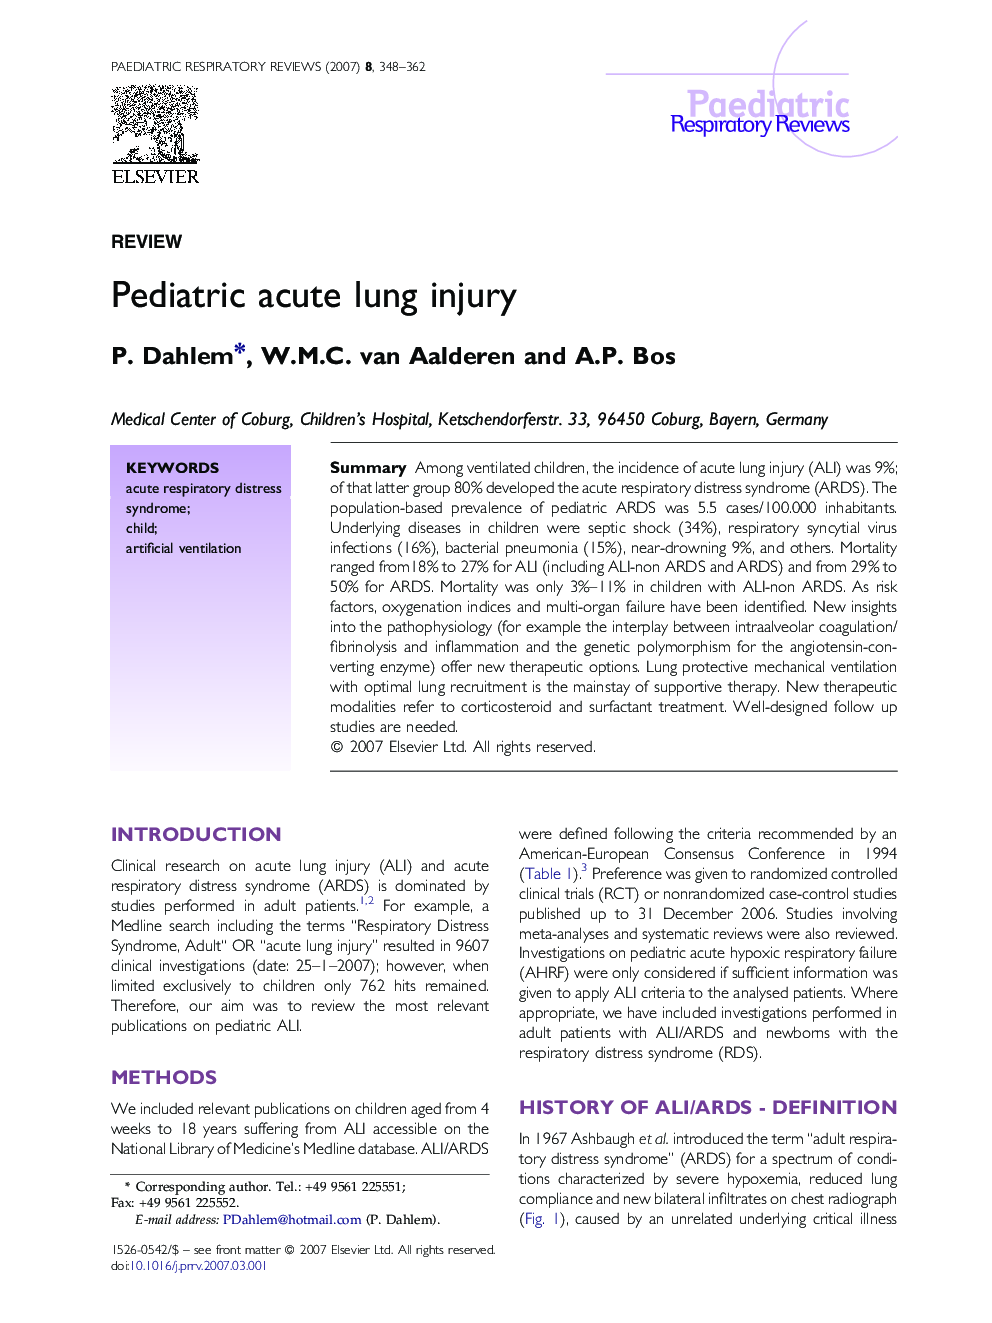 Pediatric acute lung injury